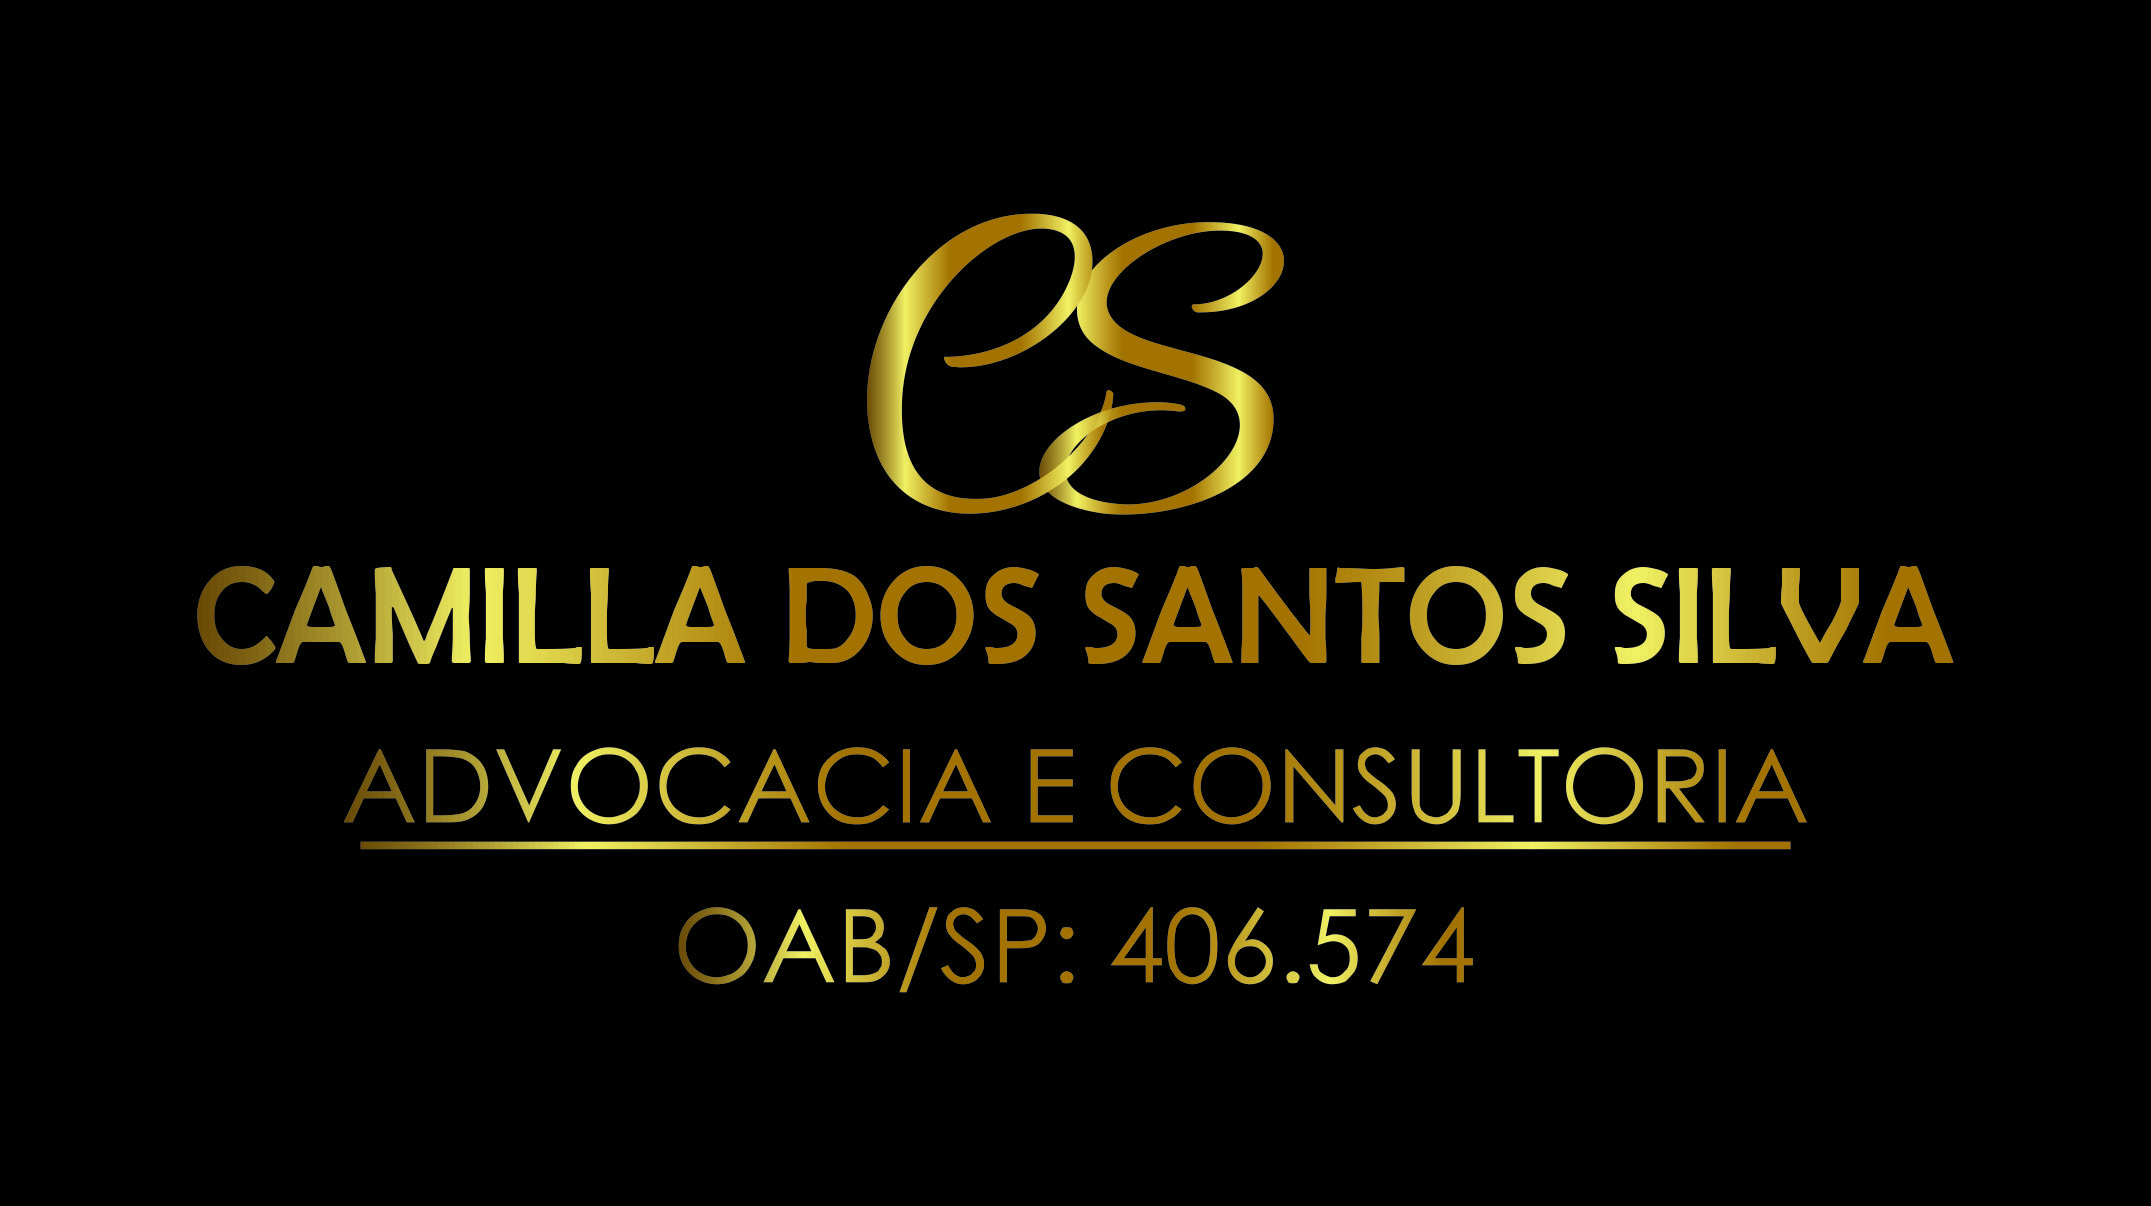 Cartao de Visita Advogada Camilla dos Santos frente